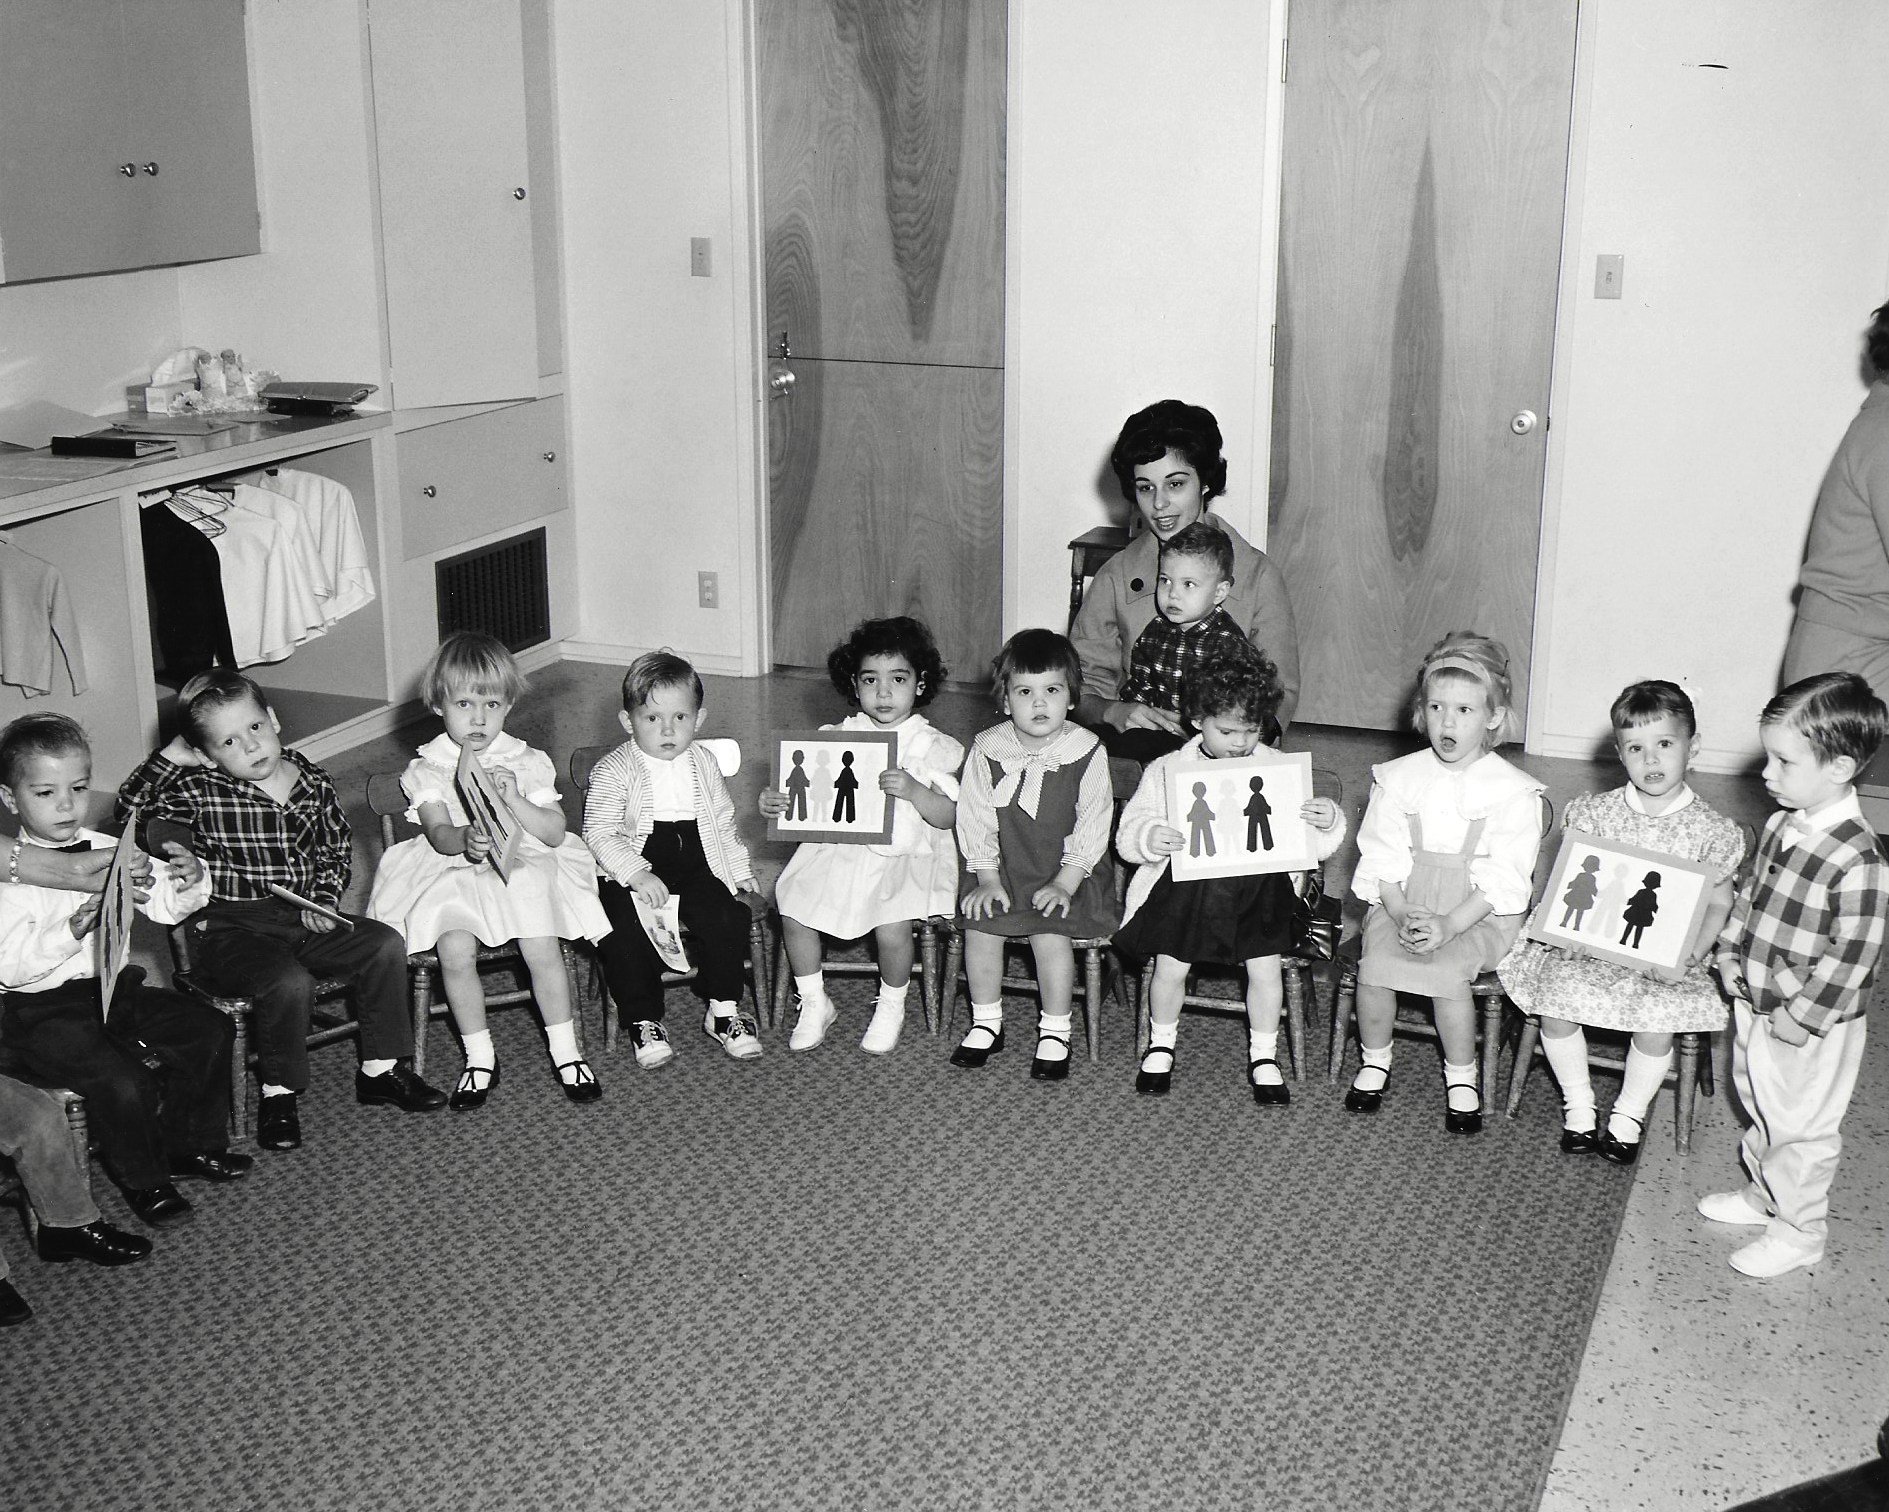 Rose Tahmisian (?) and kids, 1950s?